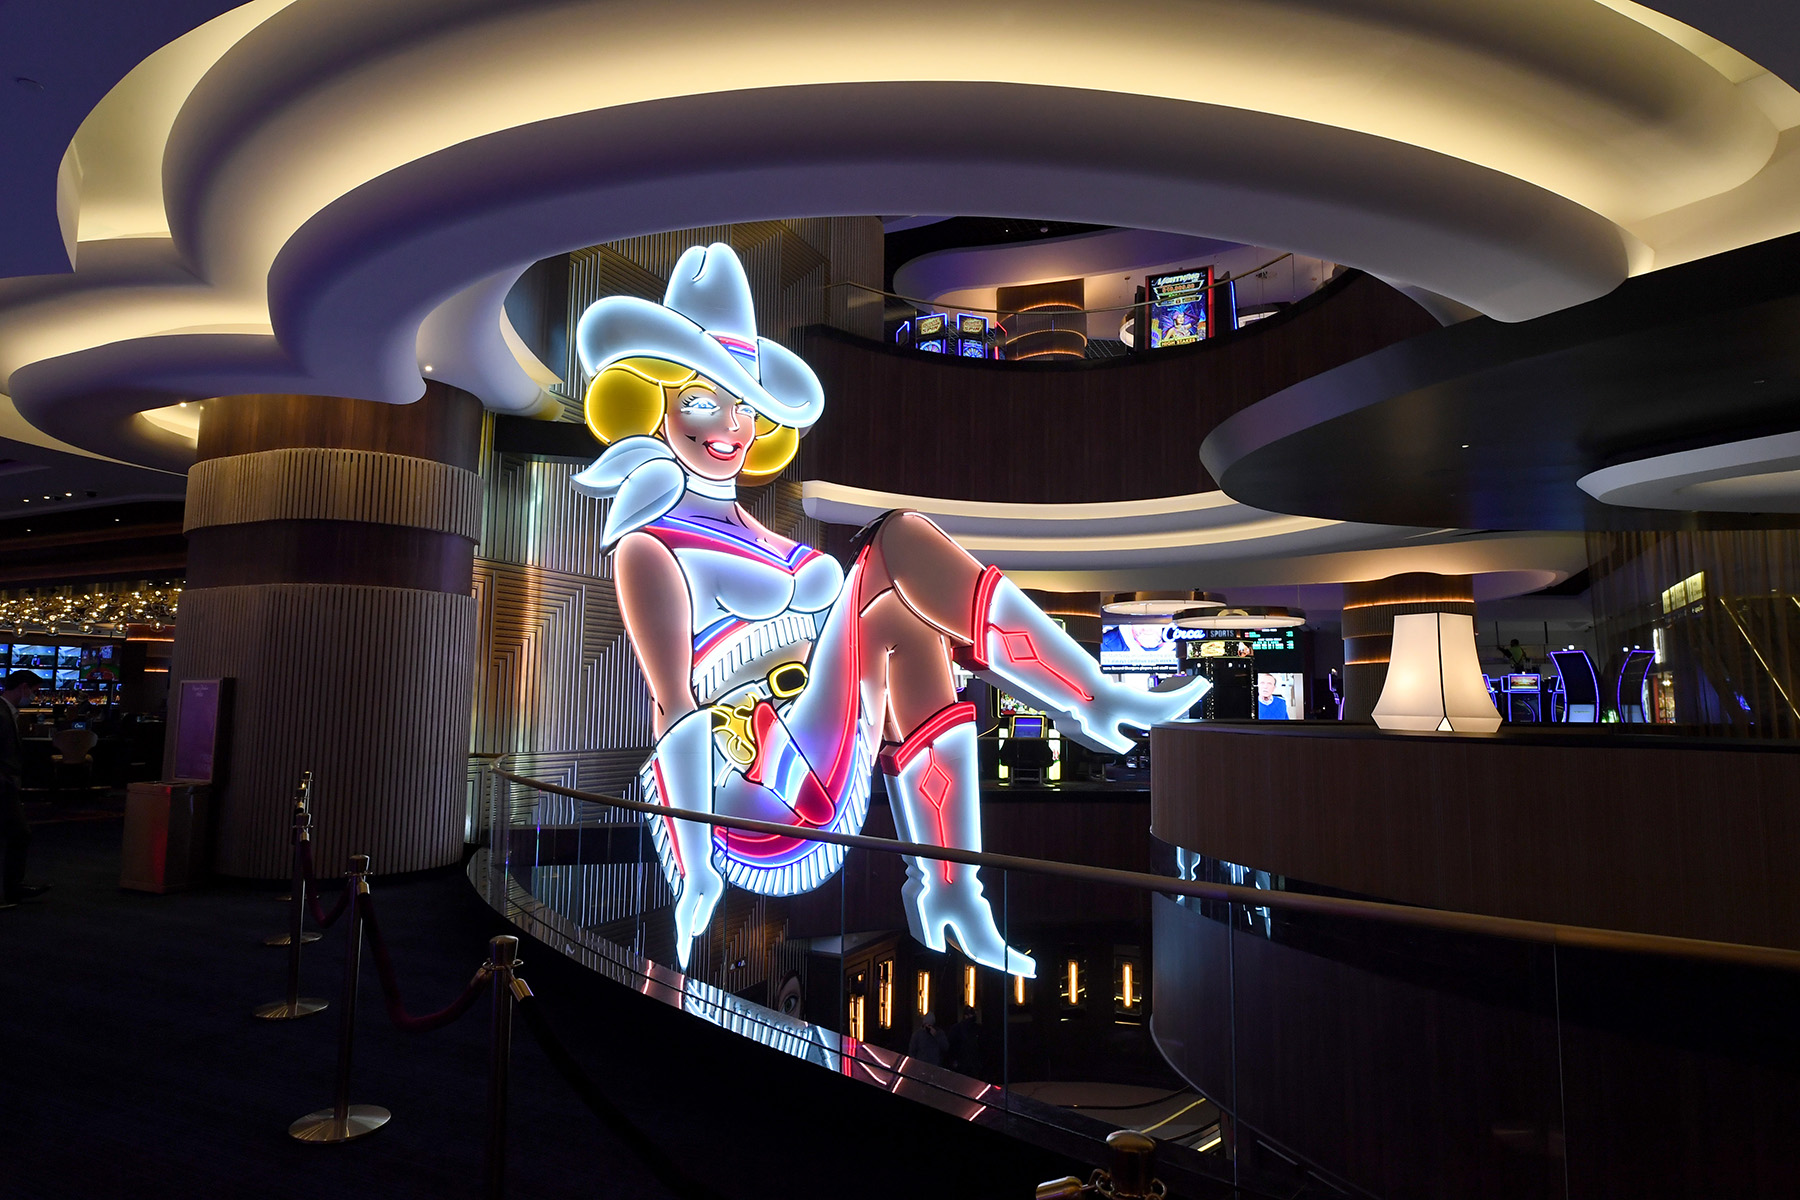 Circa Resort & Casino Las Vegas: The Time of Your Life